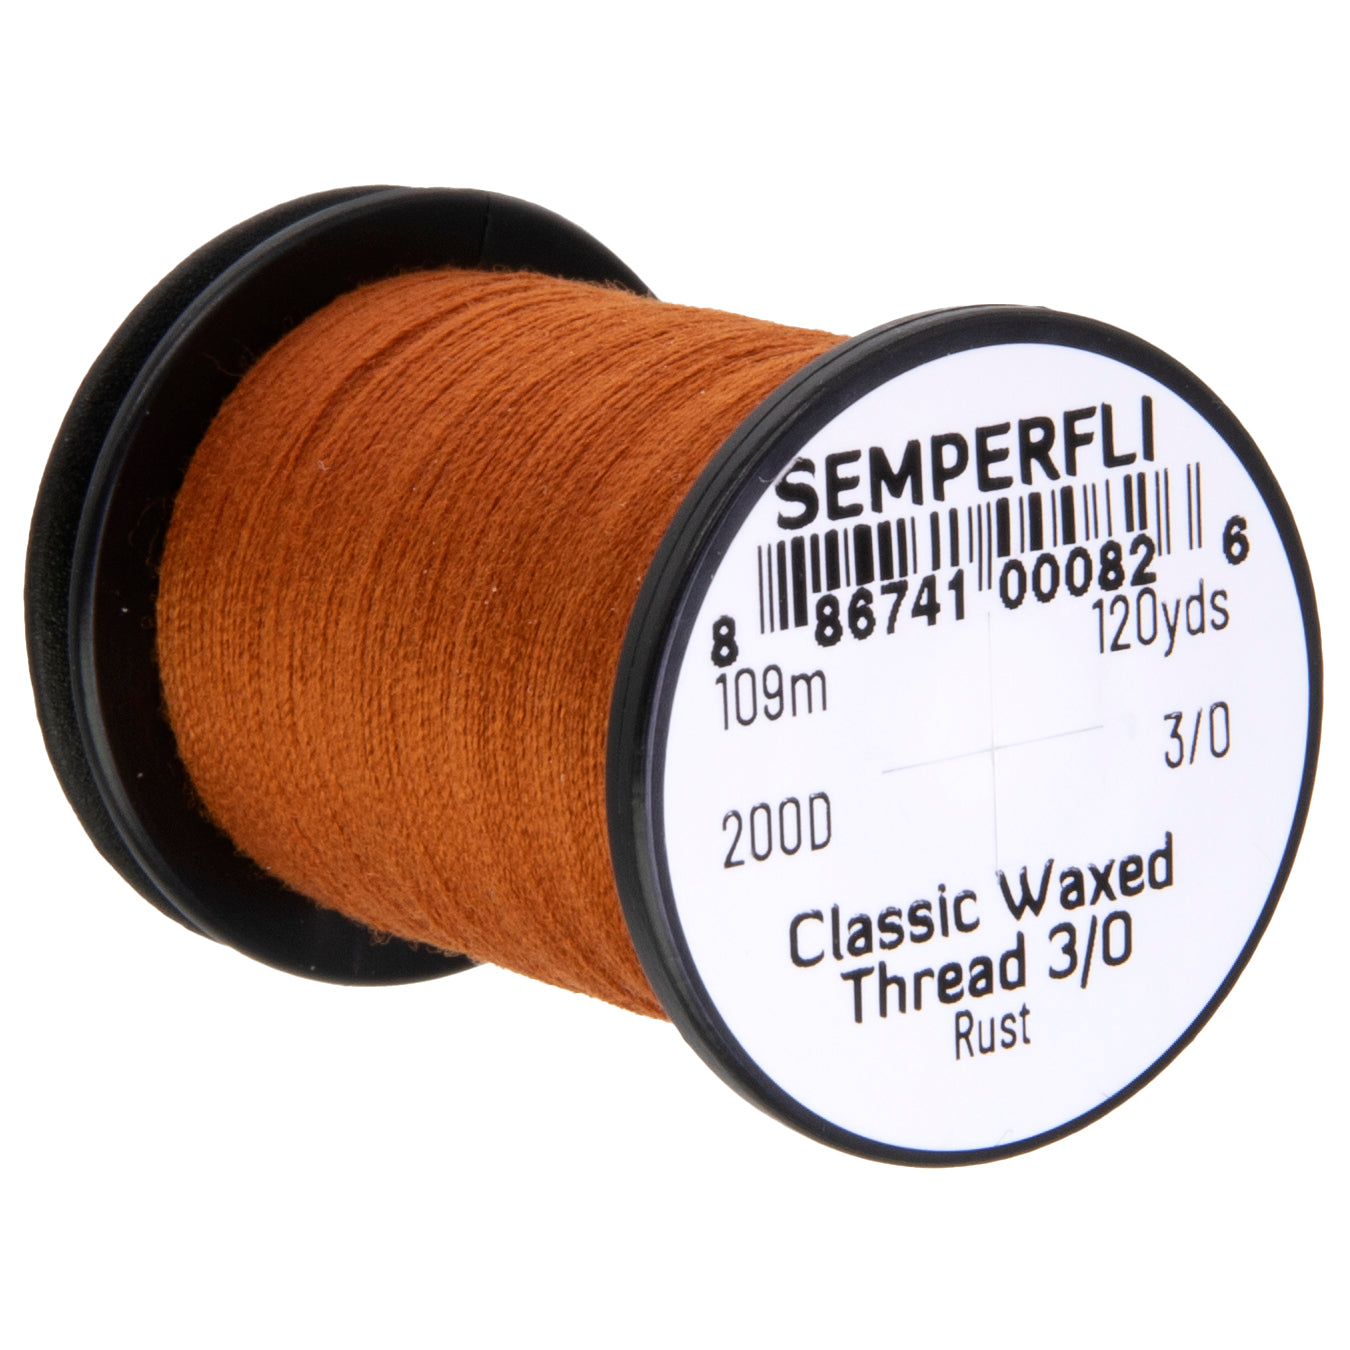 Semperfli Classic 3/0 Waxed Thread